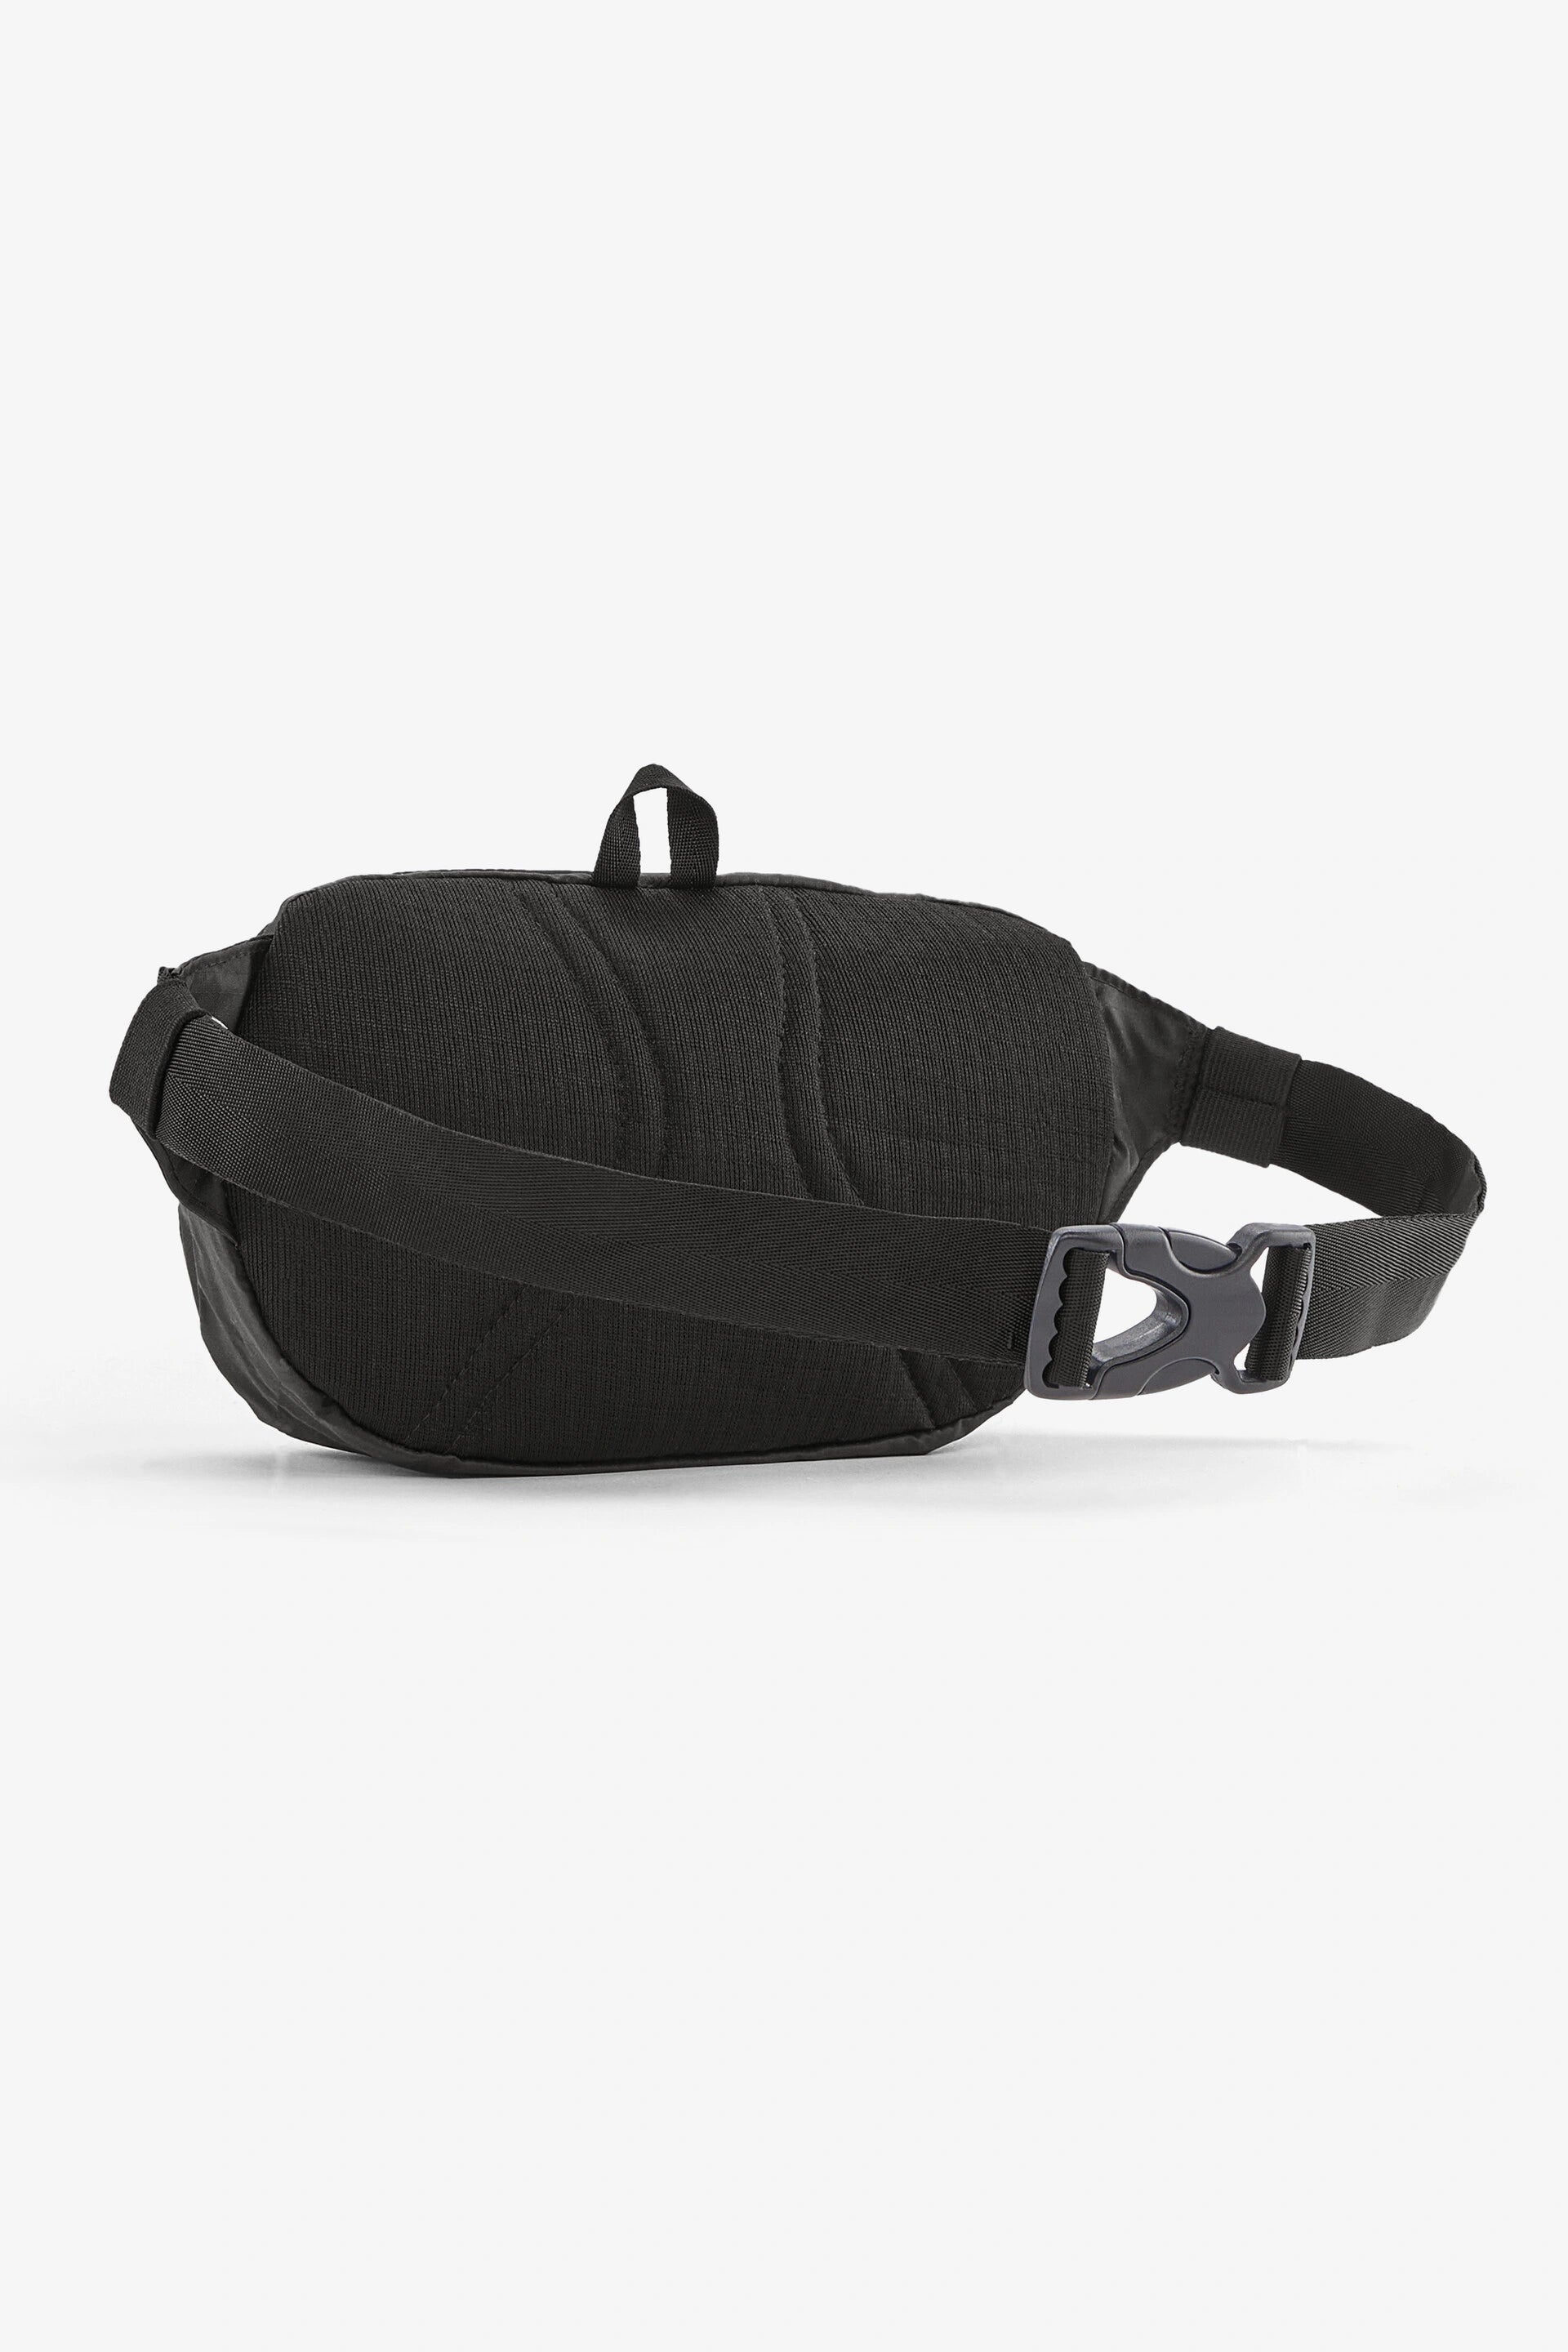 Ultralight Black Hole® Mini Hip Pack 1L Bags Patagonia   